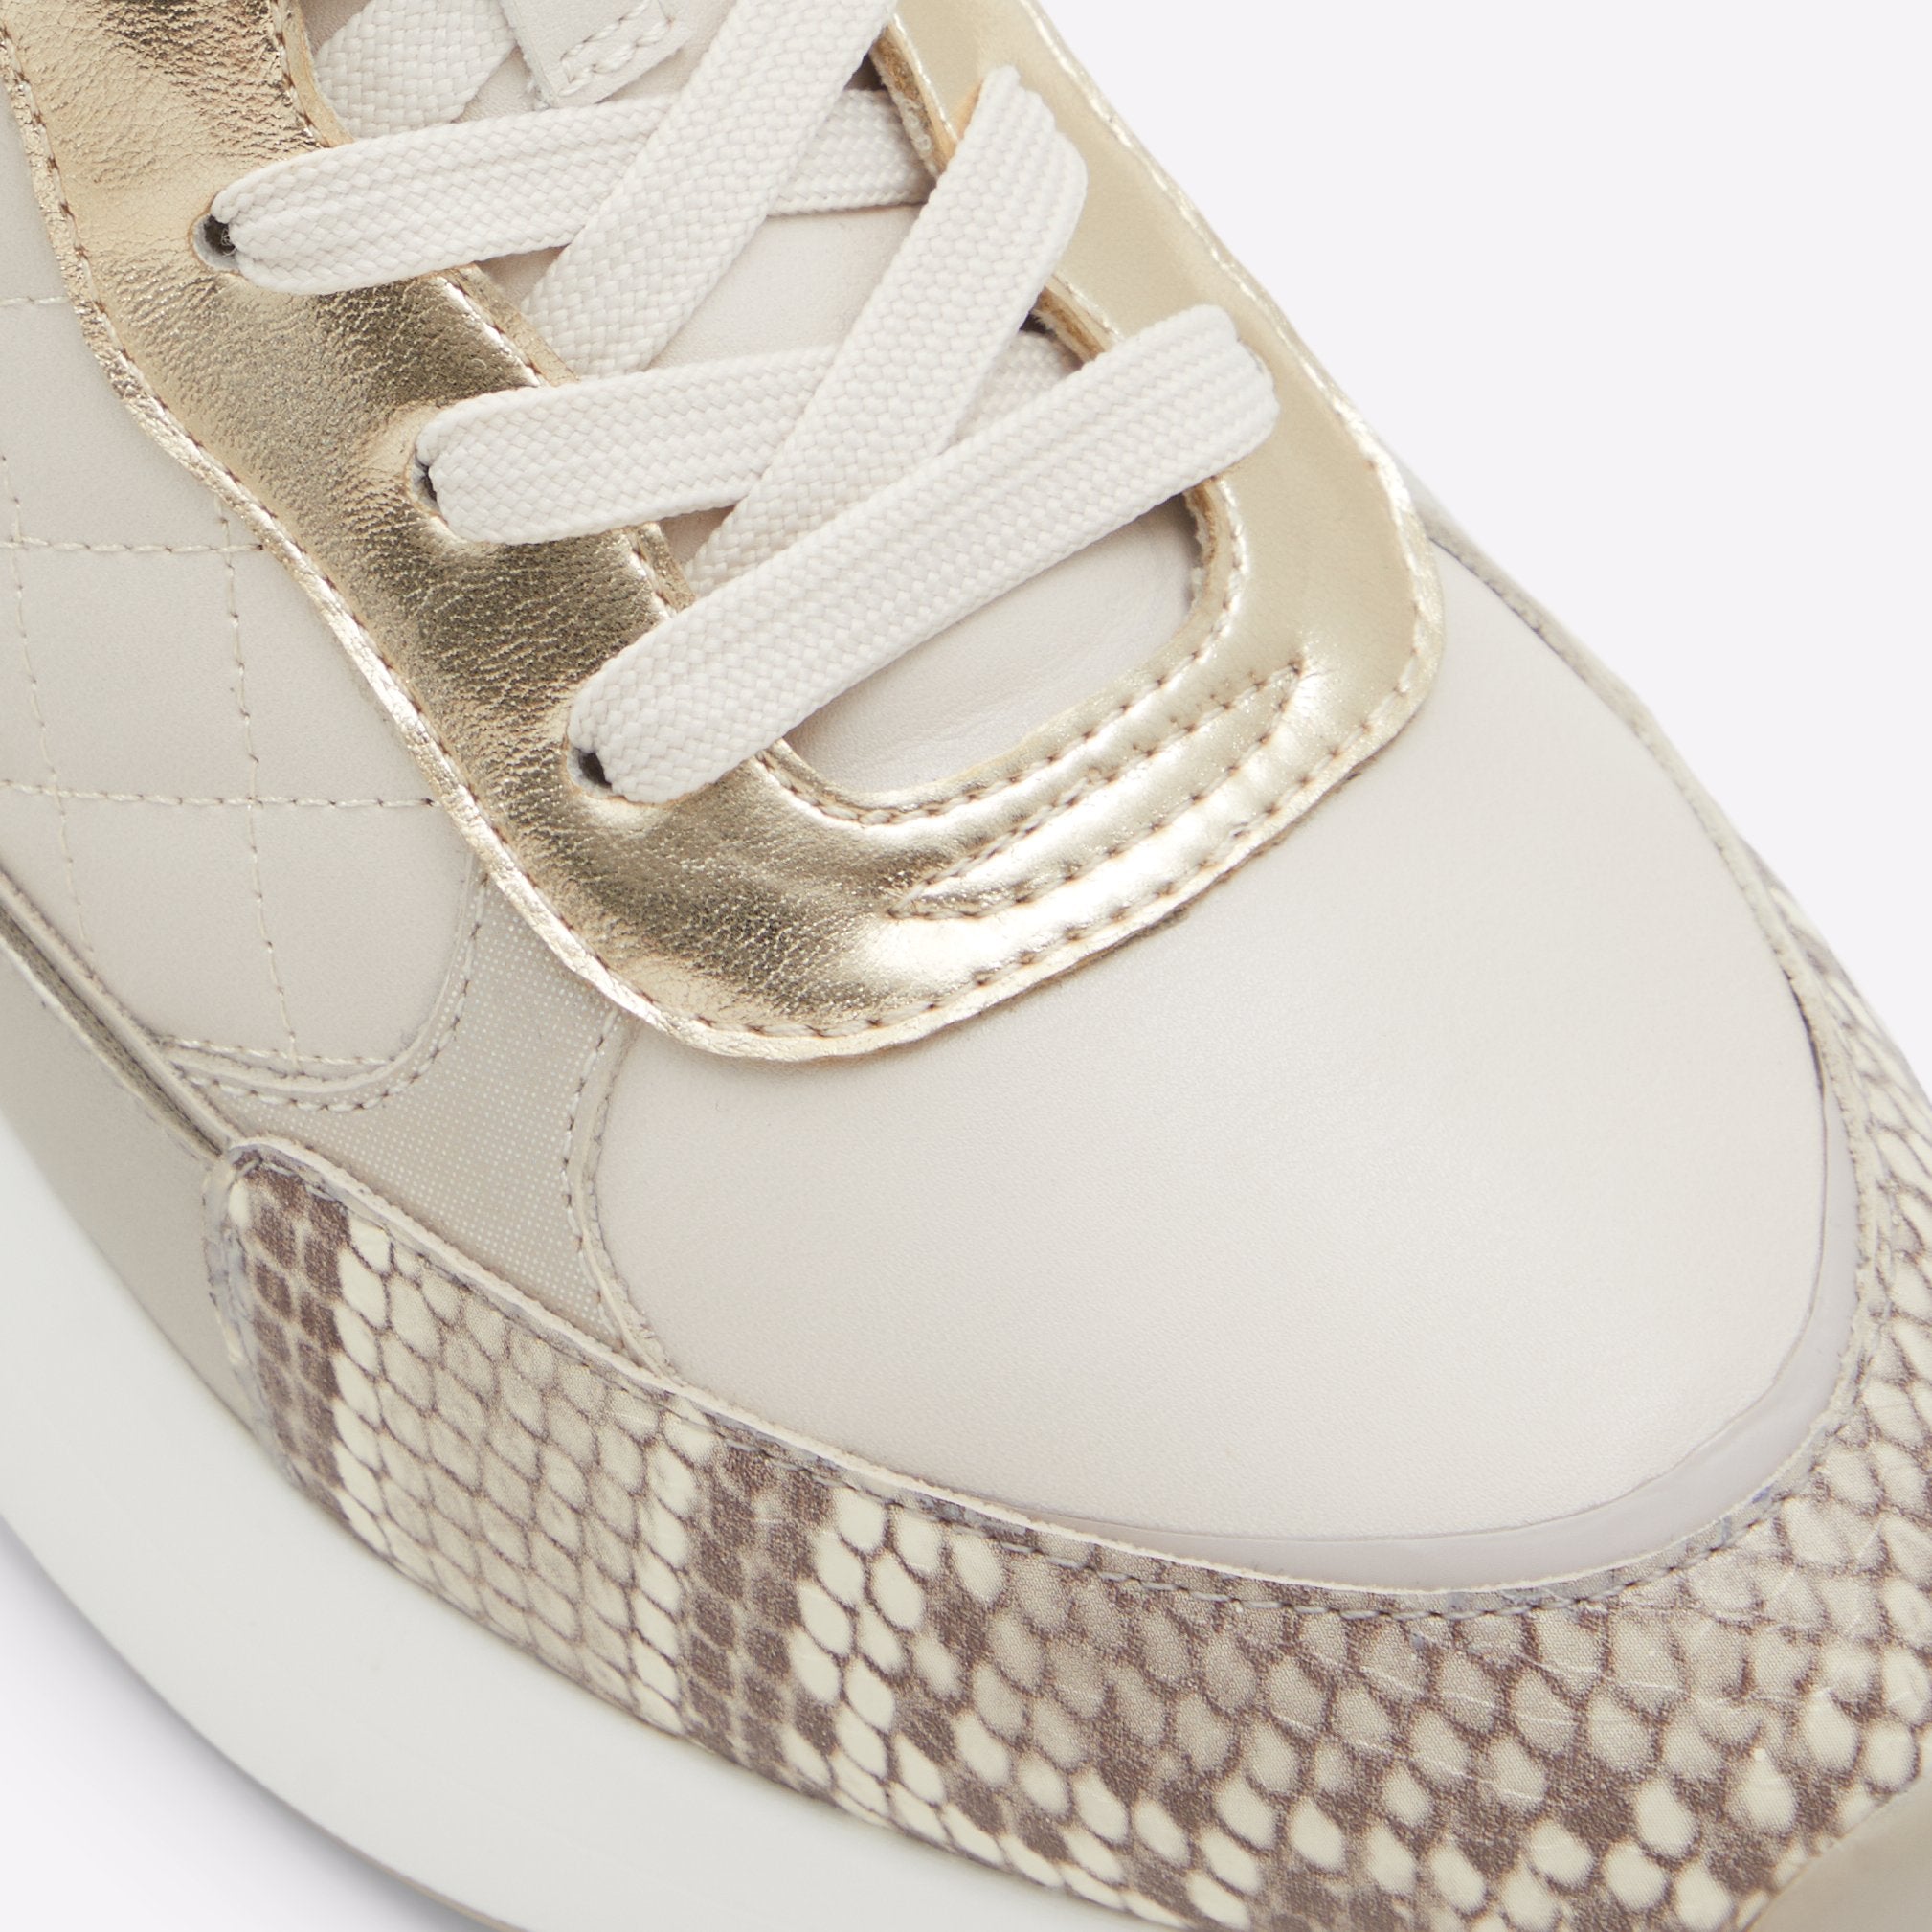 Cosmicstep / Sneakers Women Shoes - Light Gray - ALDO KSA